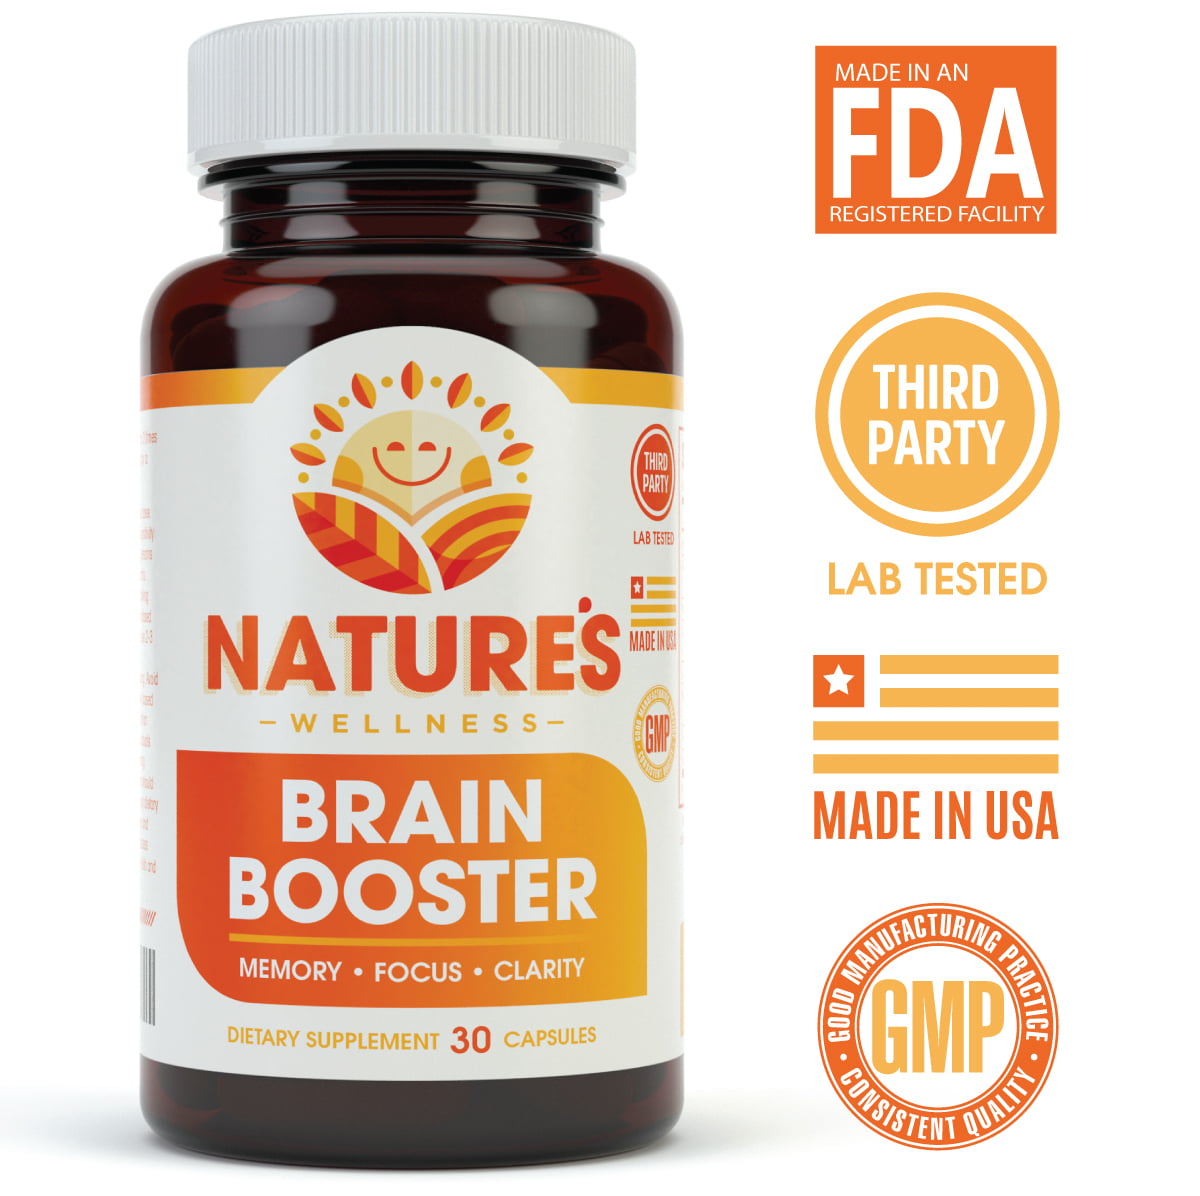 Natural Brain Booster for Focus, Memory & Clarity